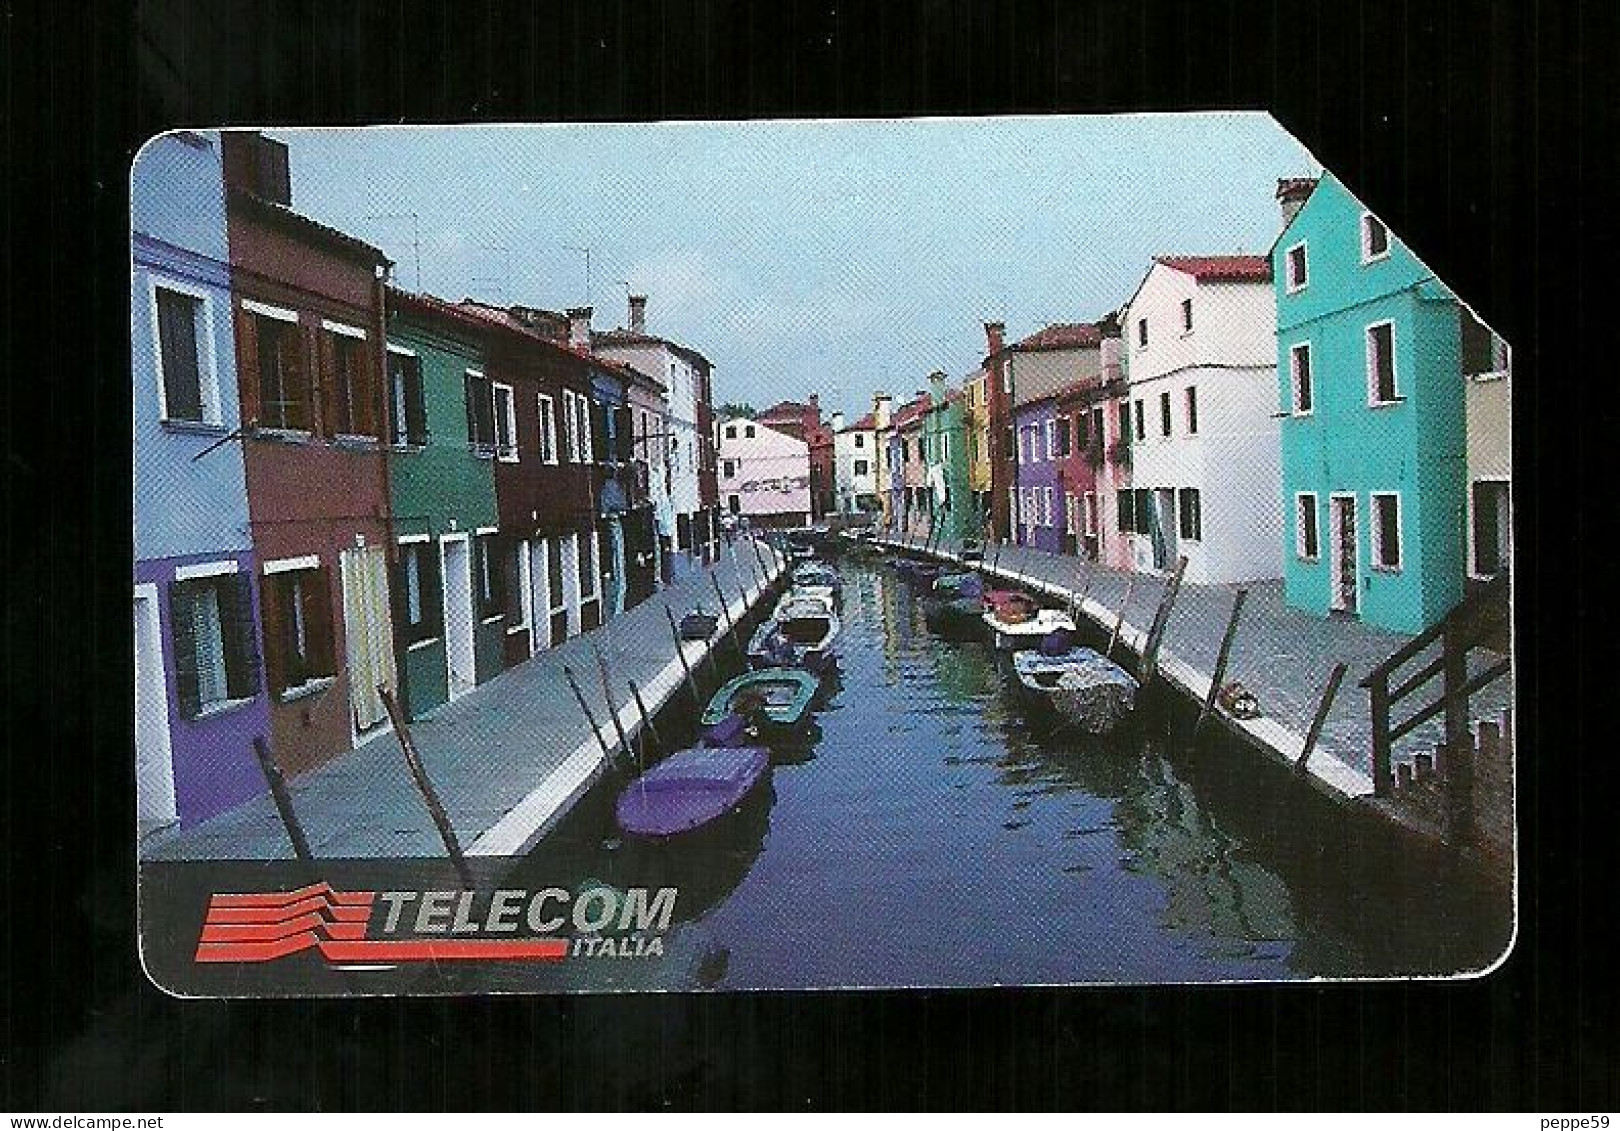 738 Golden - Linee D'italia - Veneto Da Lire 10.000 Telecom - Publiques Publicitaires